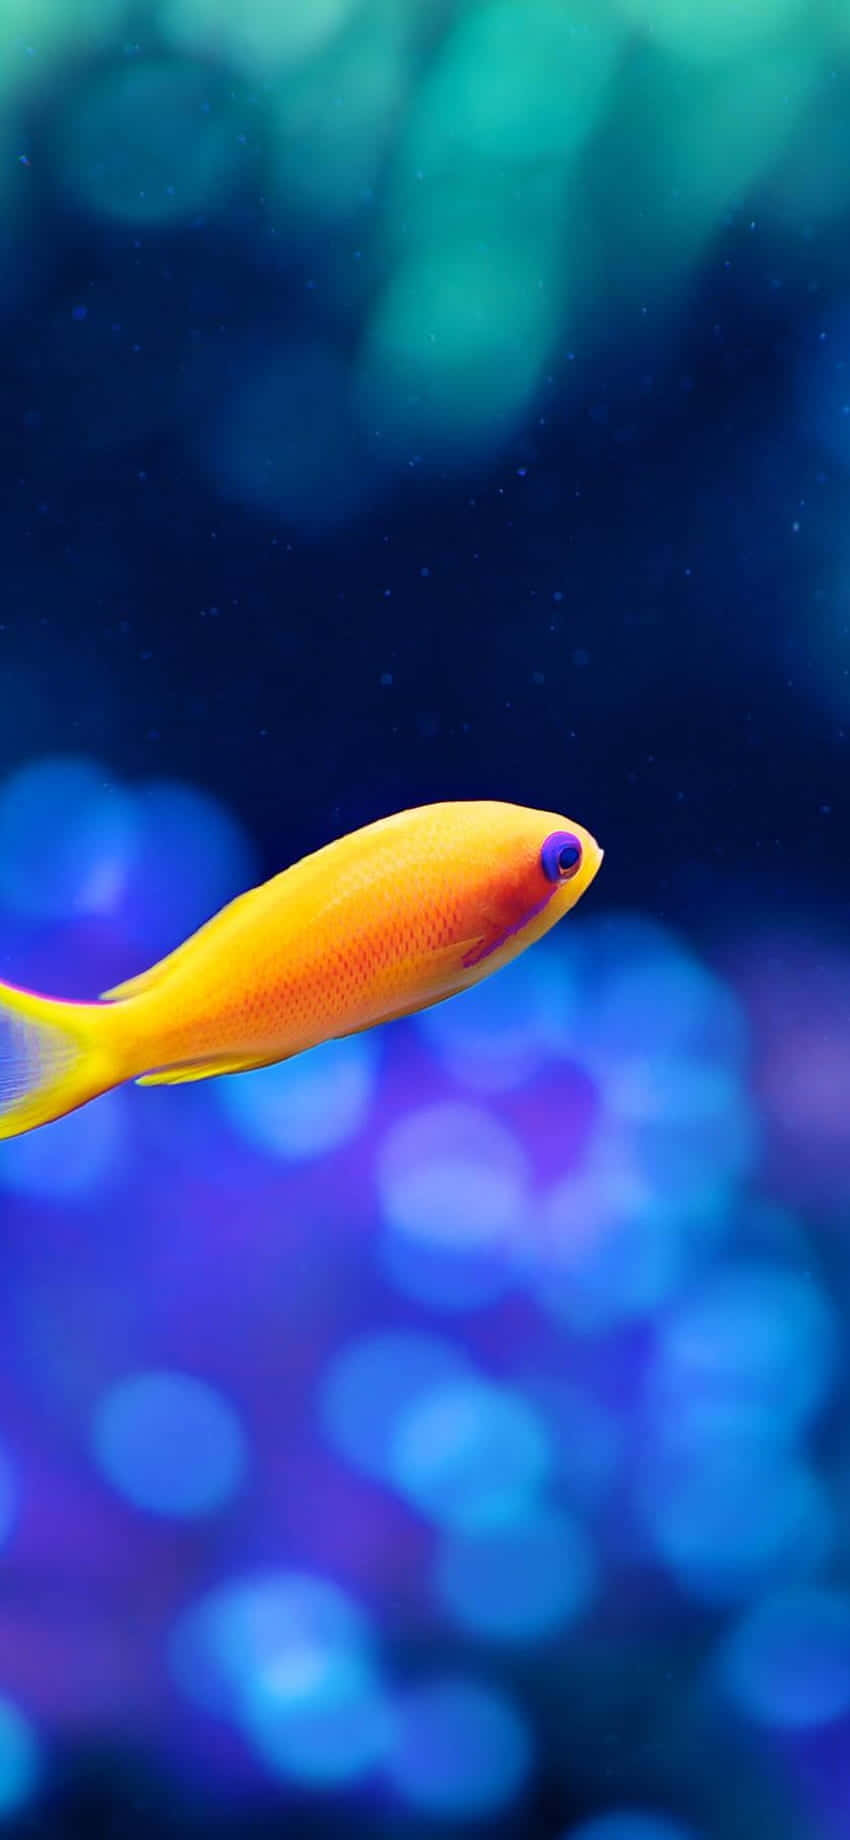 Enjoy the serenity of fish tanks with Aquarium iPhone Wallpaper